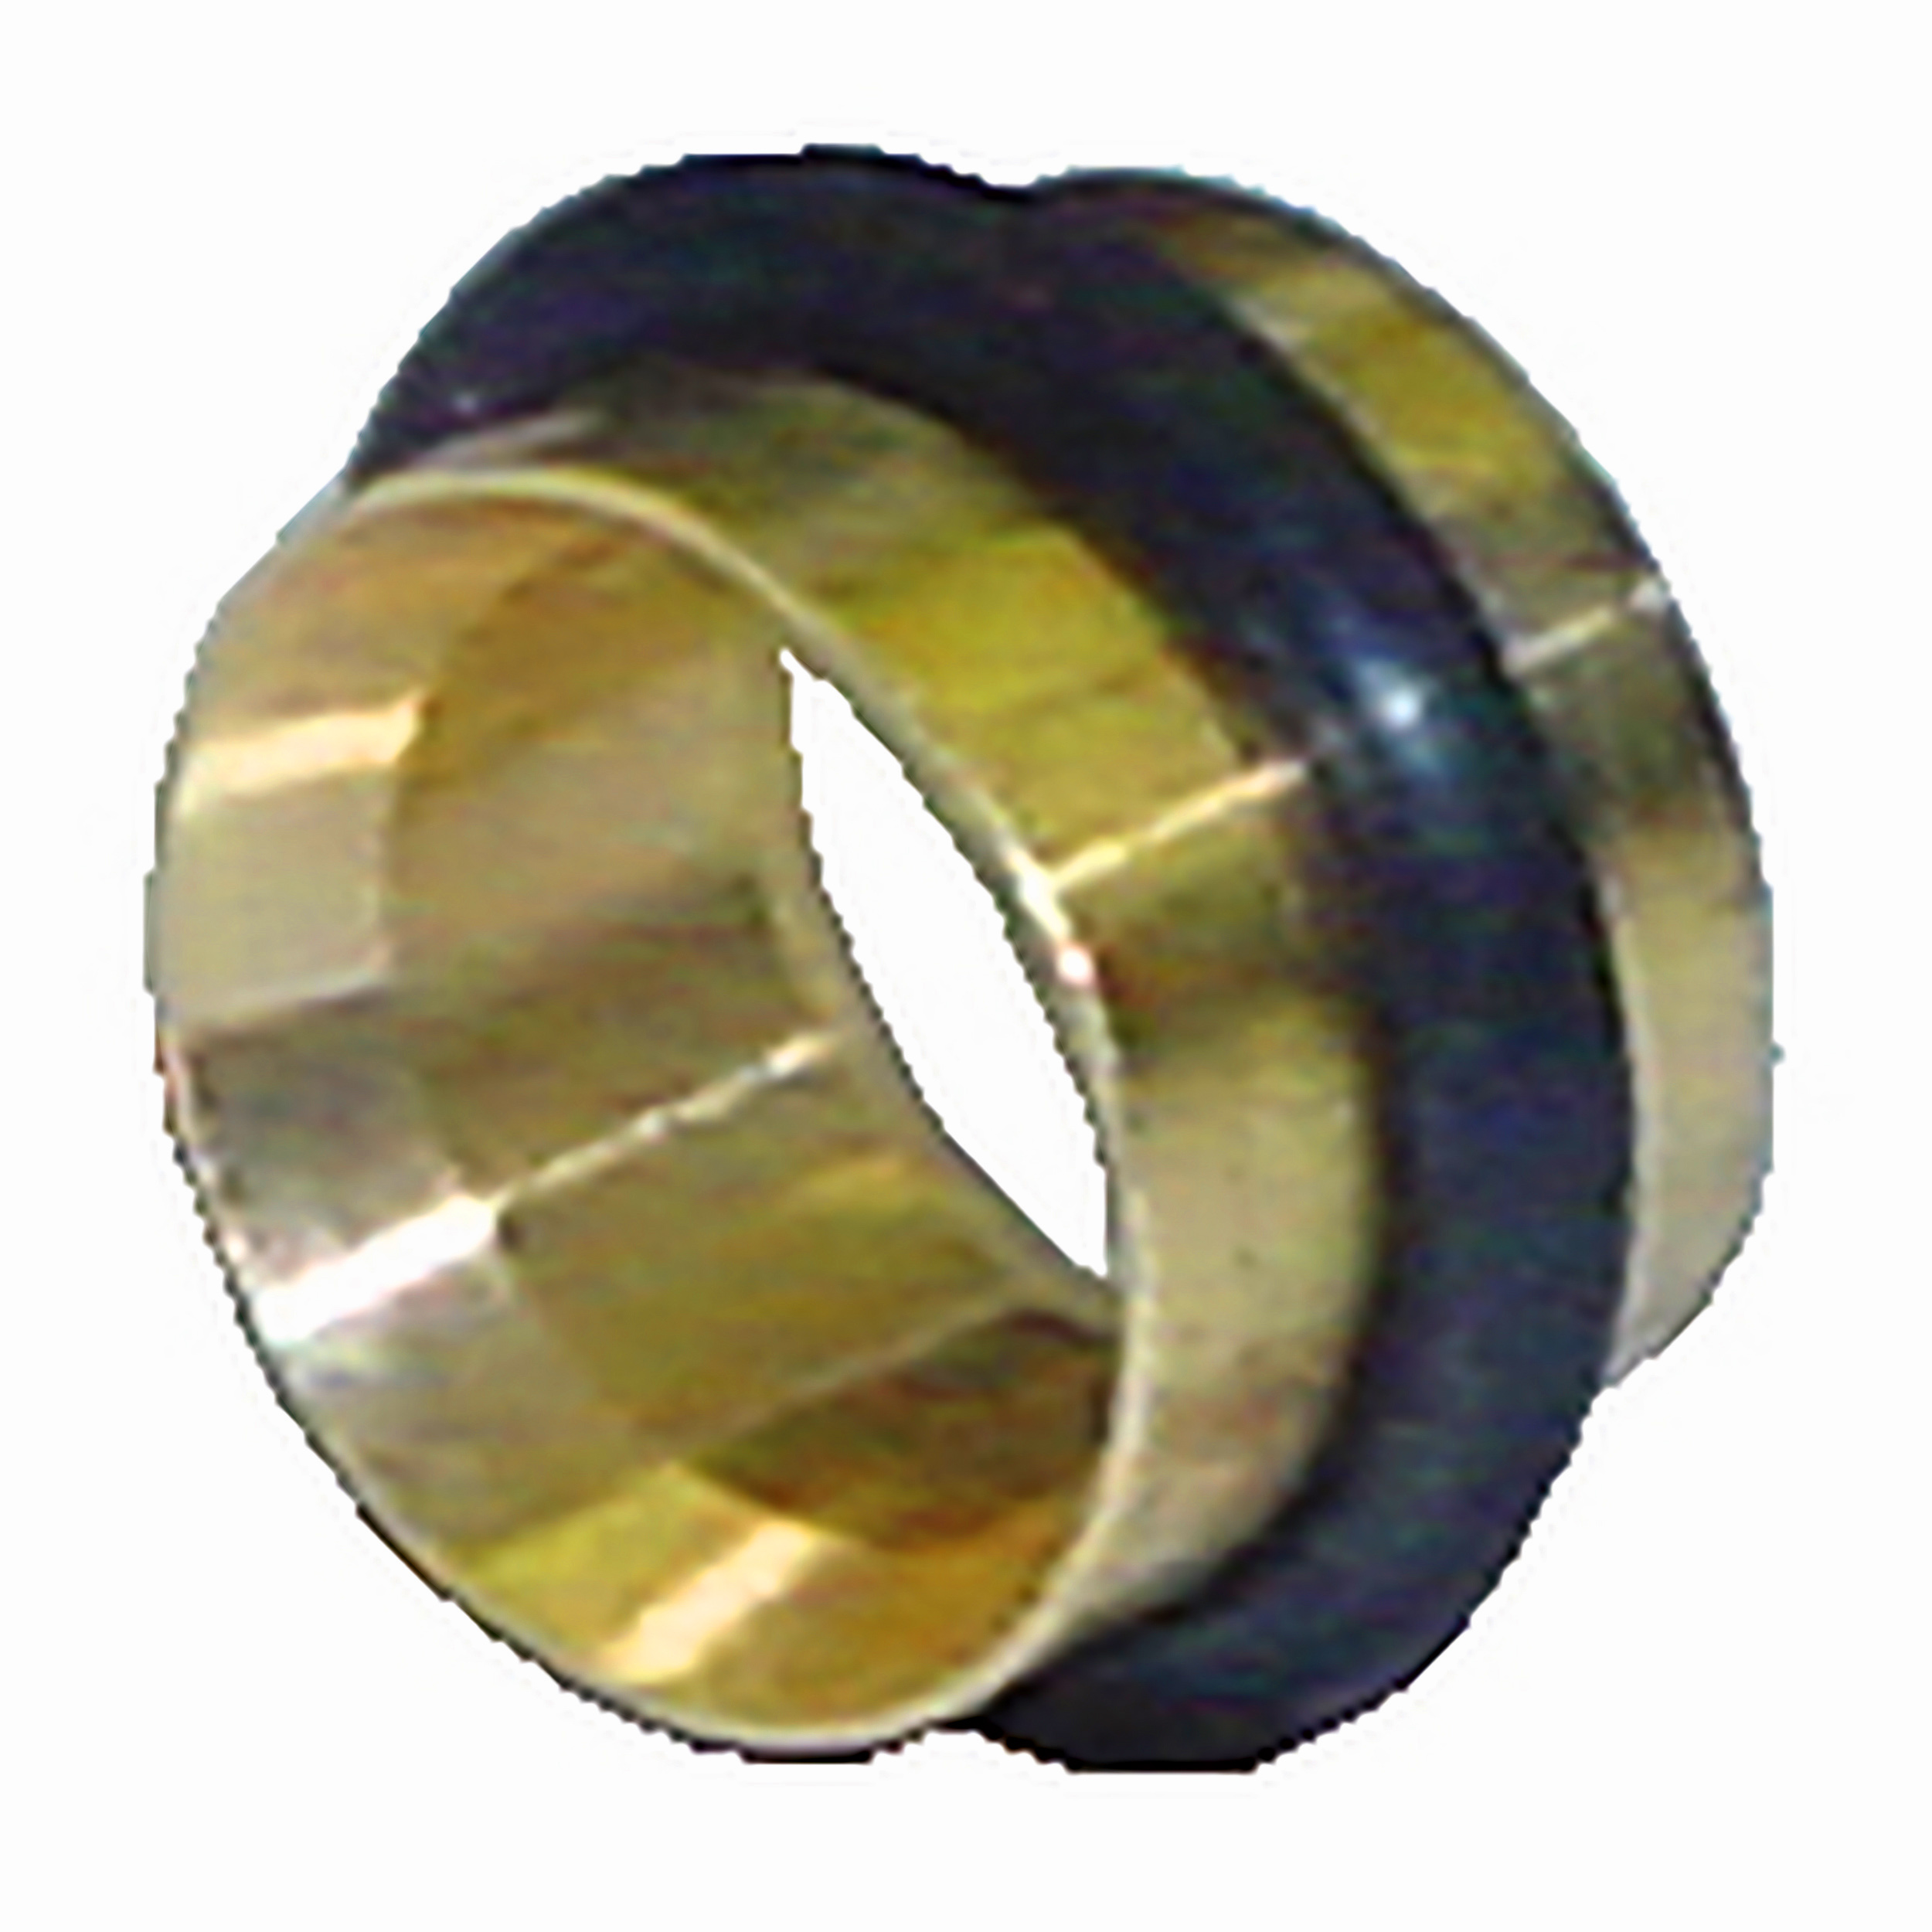 Dichtungssatz für Kompaktverbindungs-Set variobloc, G¼, BG 20, Hülse, O-Ring